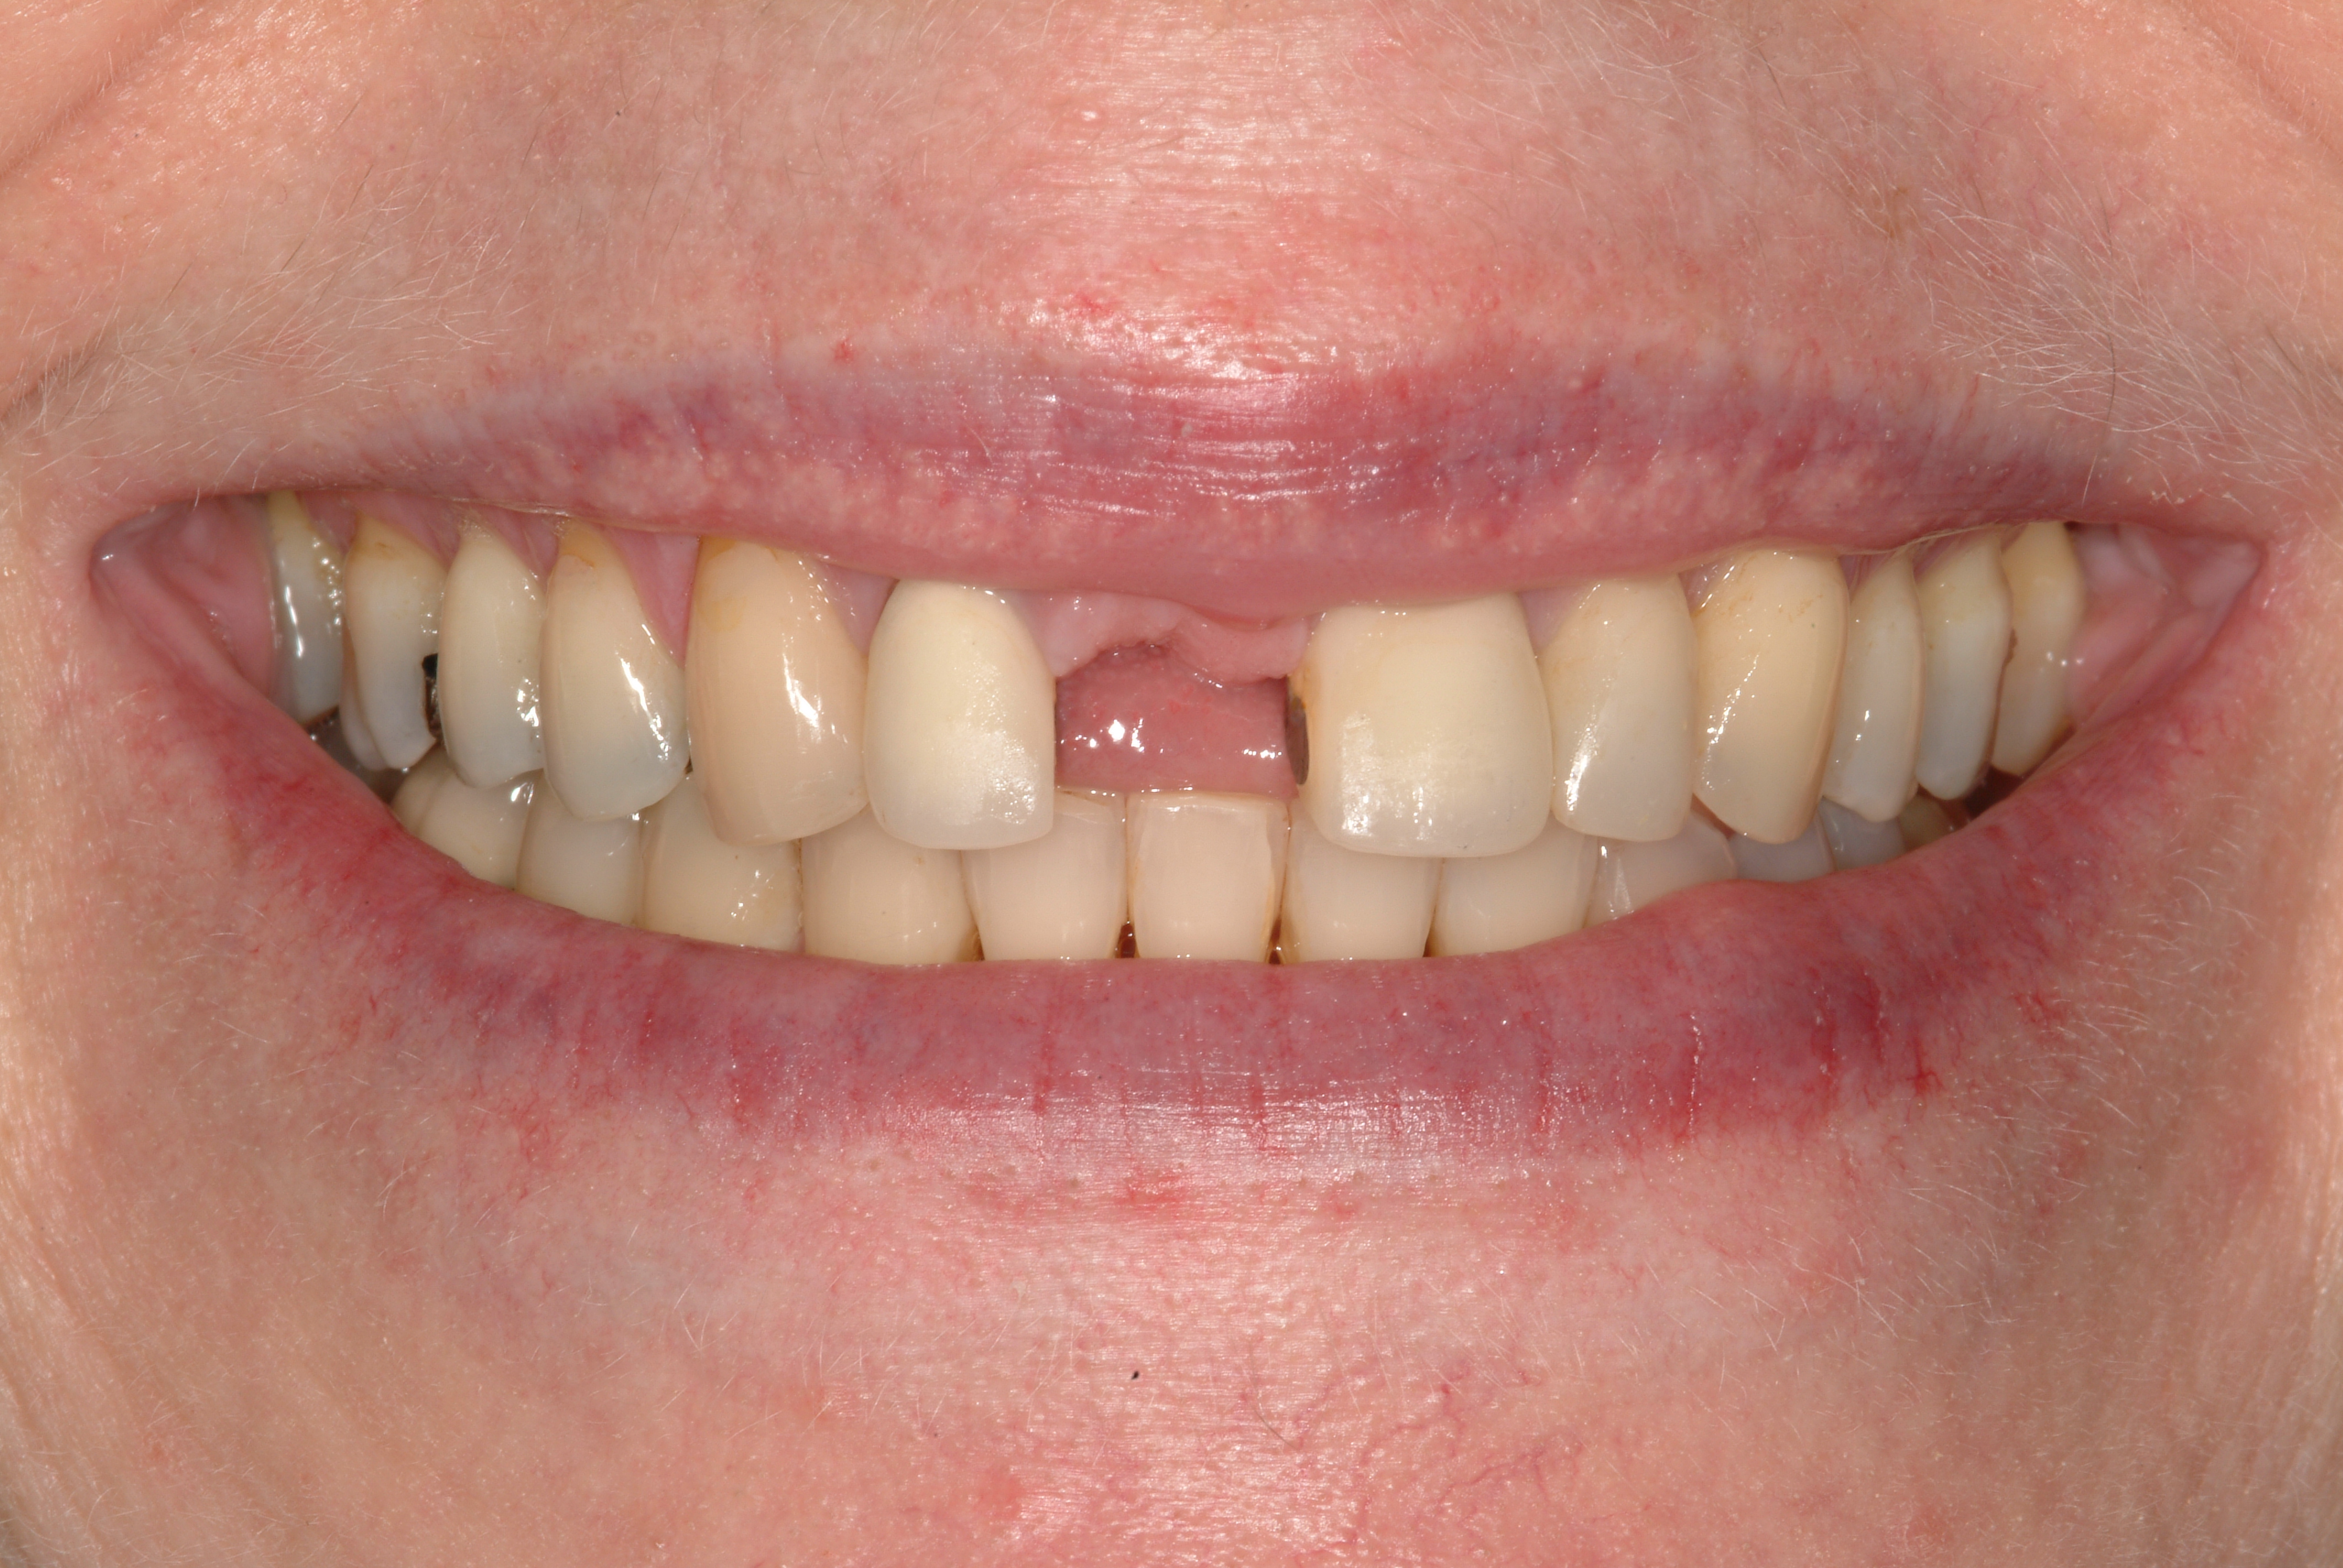 Before treatment by Wilsonville dentist